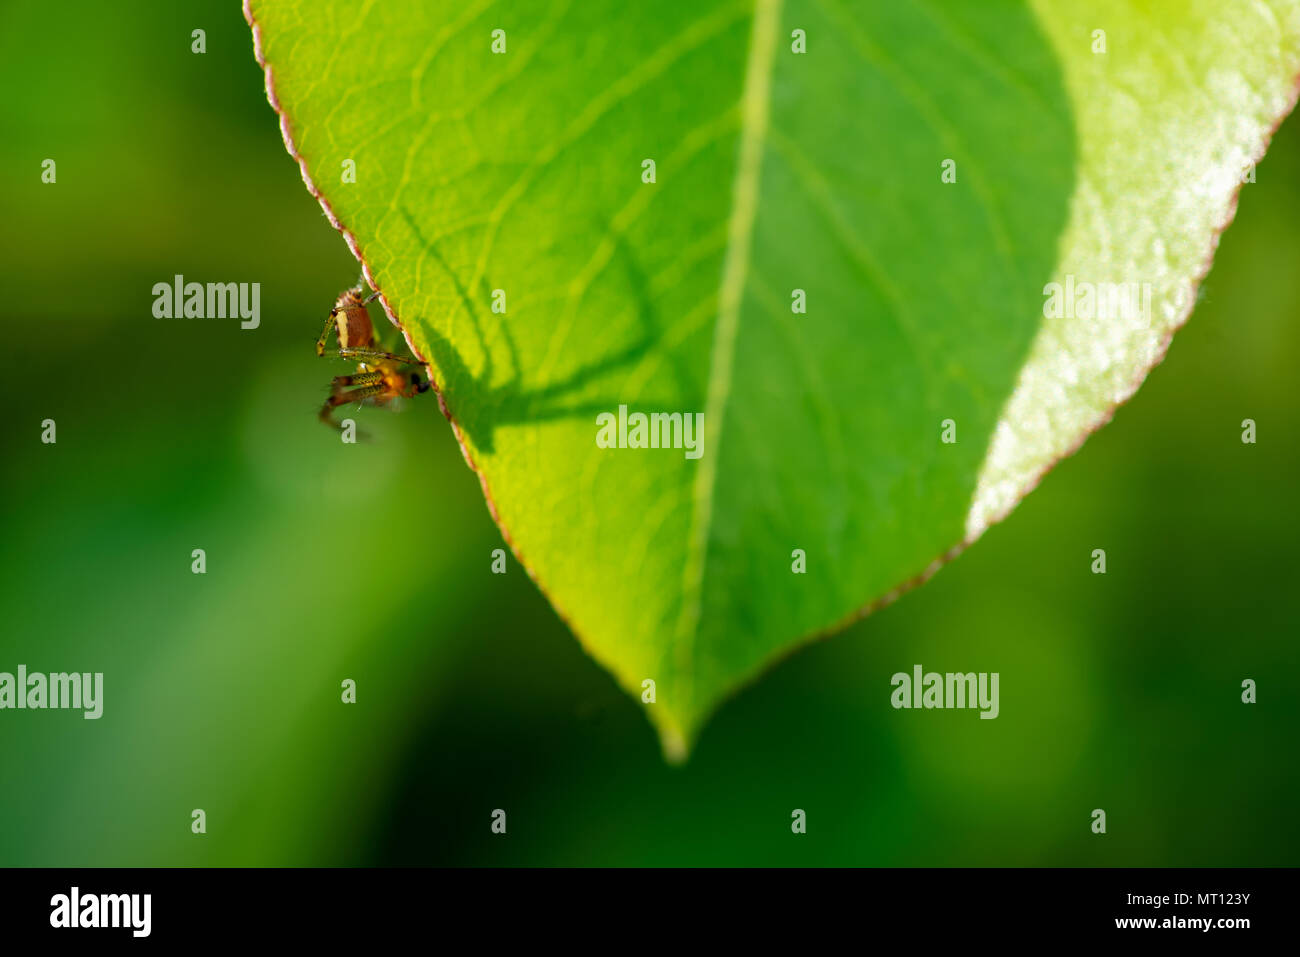 A spider on a green leaf - symbolizes arachnophobia. Stock Photo